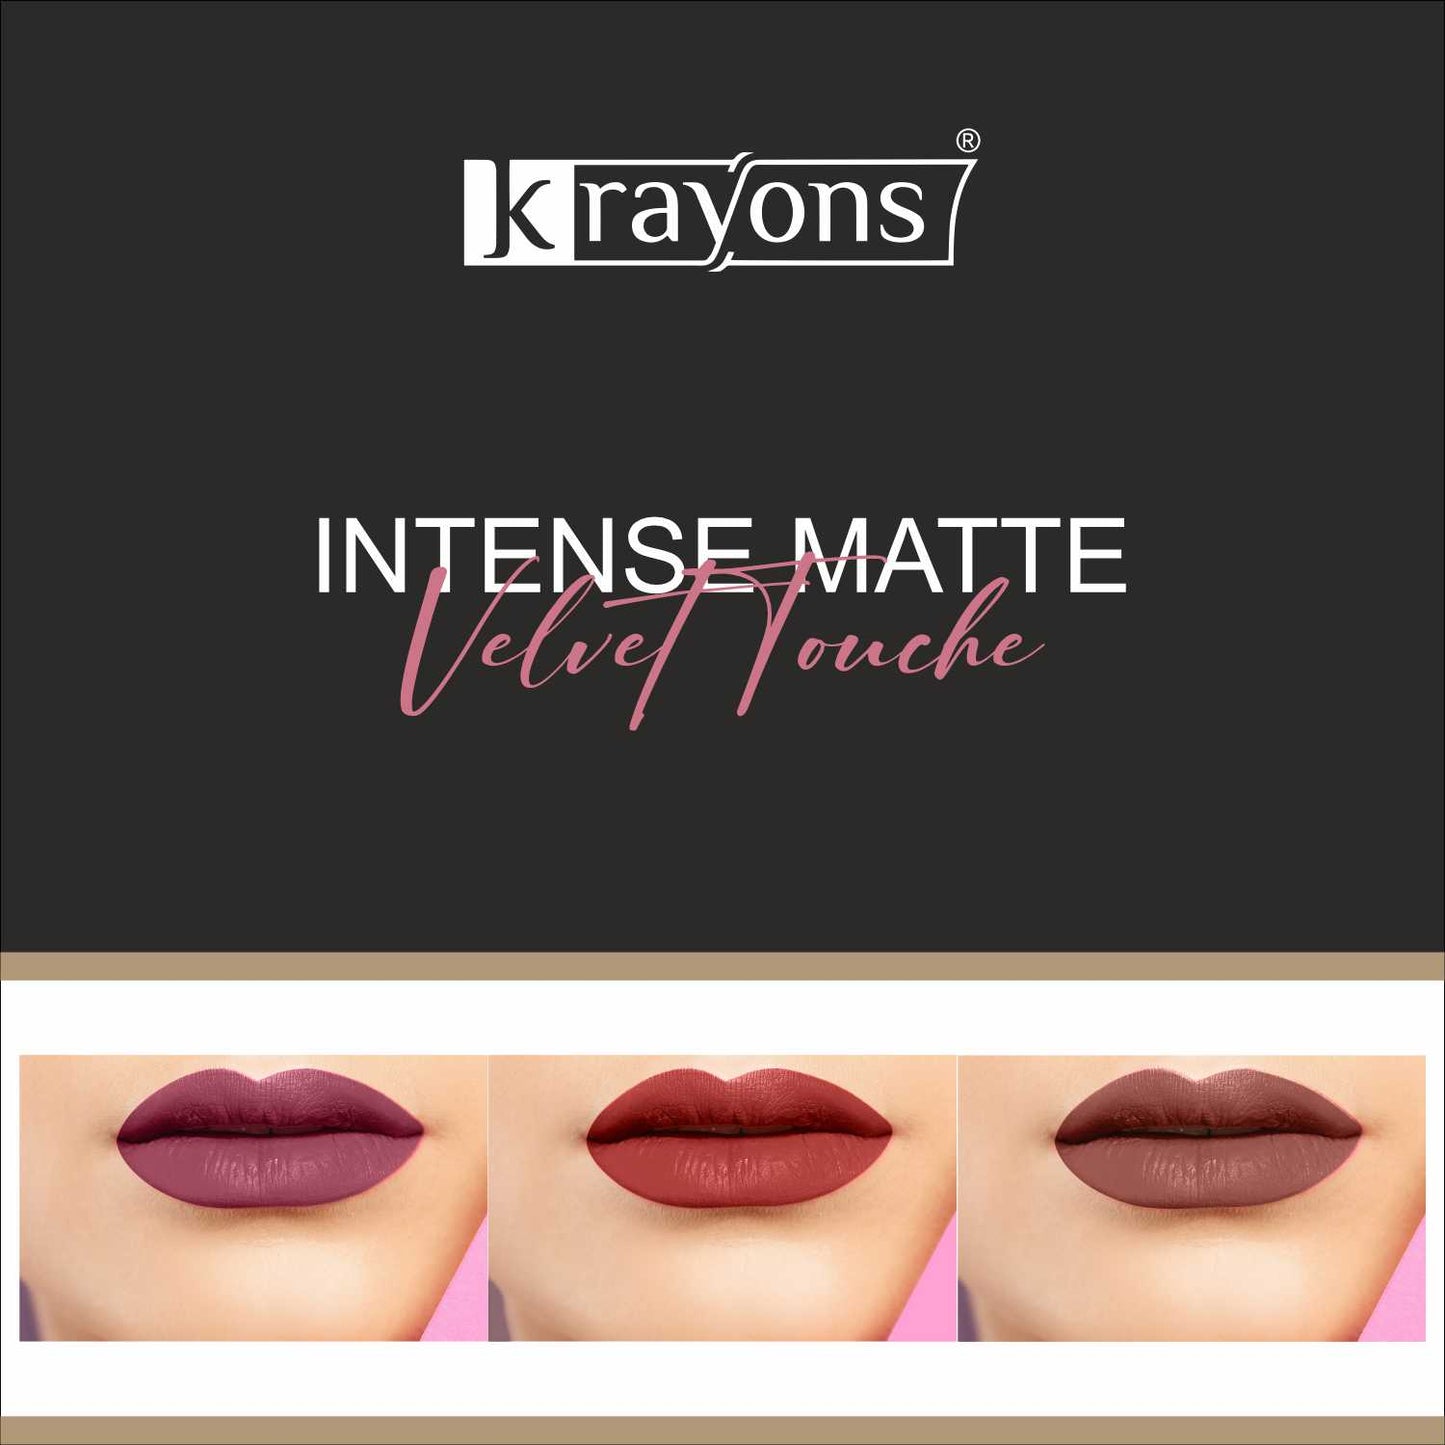 Krayons Intense Matte Lipstick, Waterproof, Longlasting, Rose Red, Scarlet Red, Chocolate Caramel, 3.5gm Each (Pack of 3)